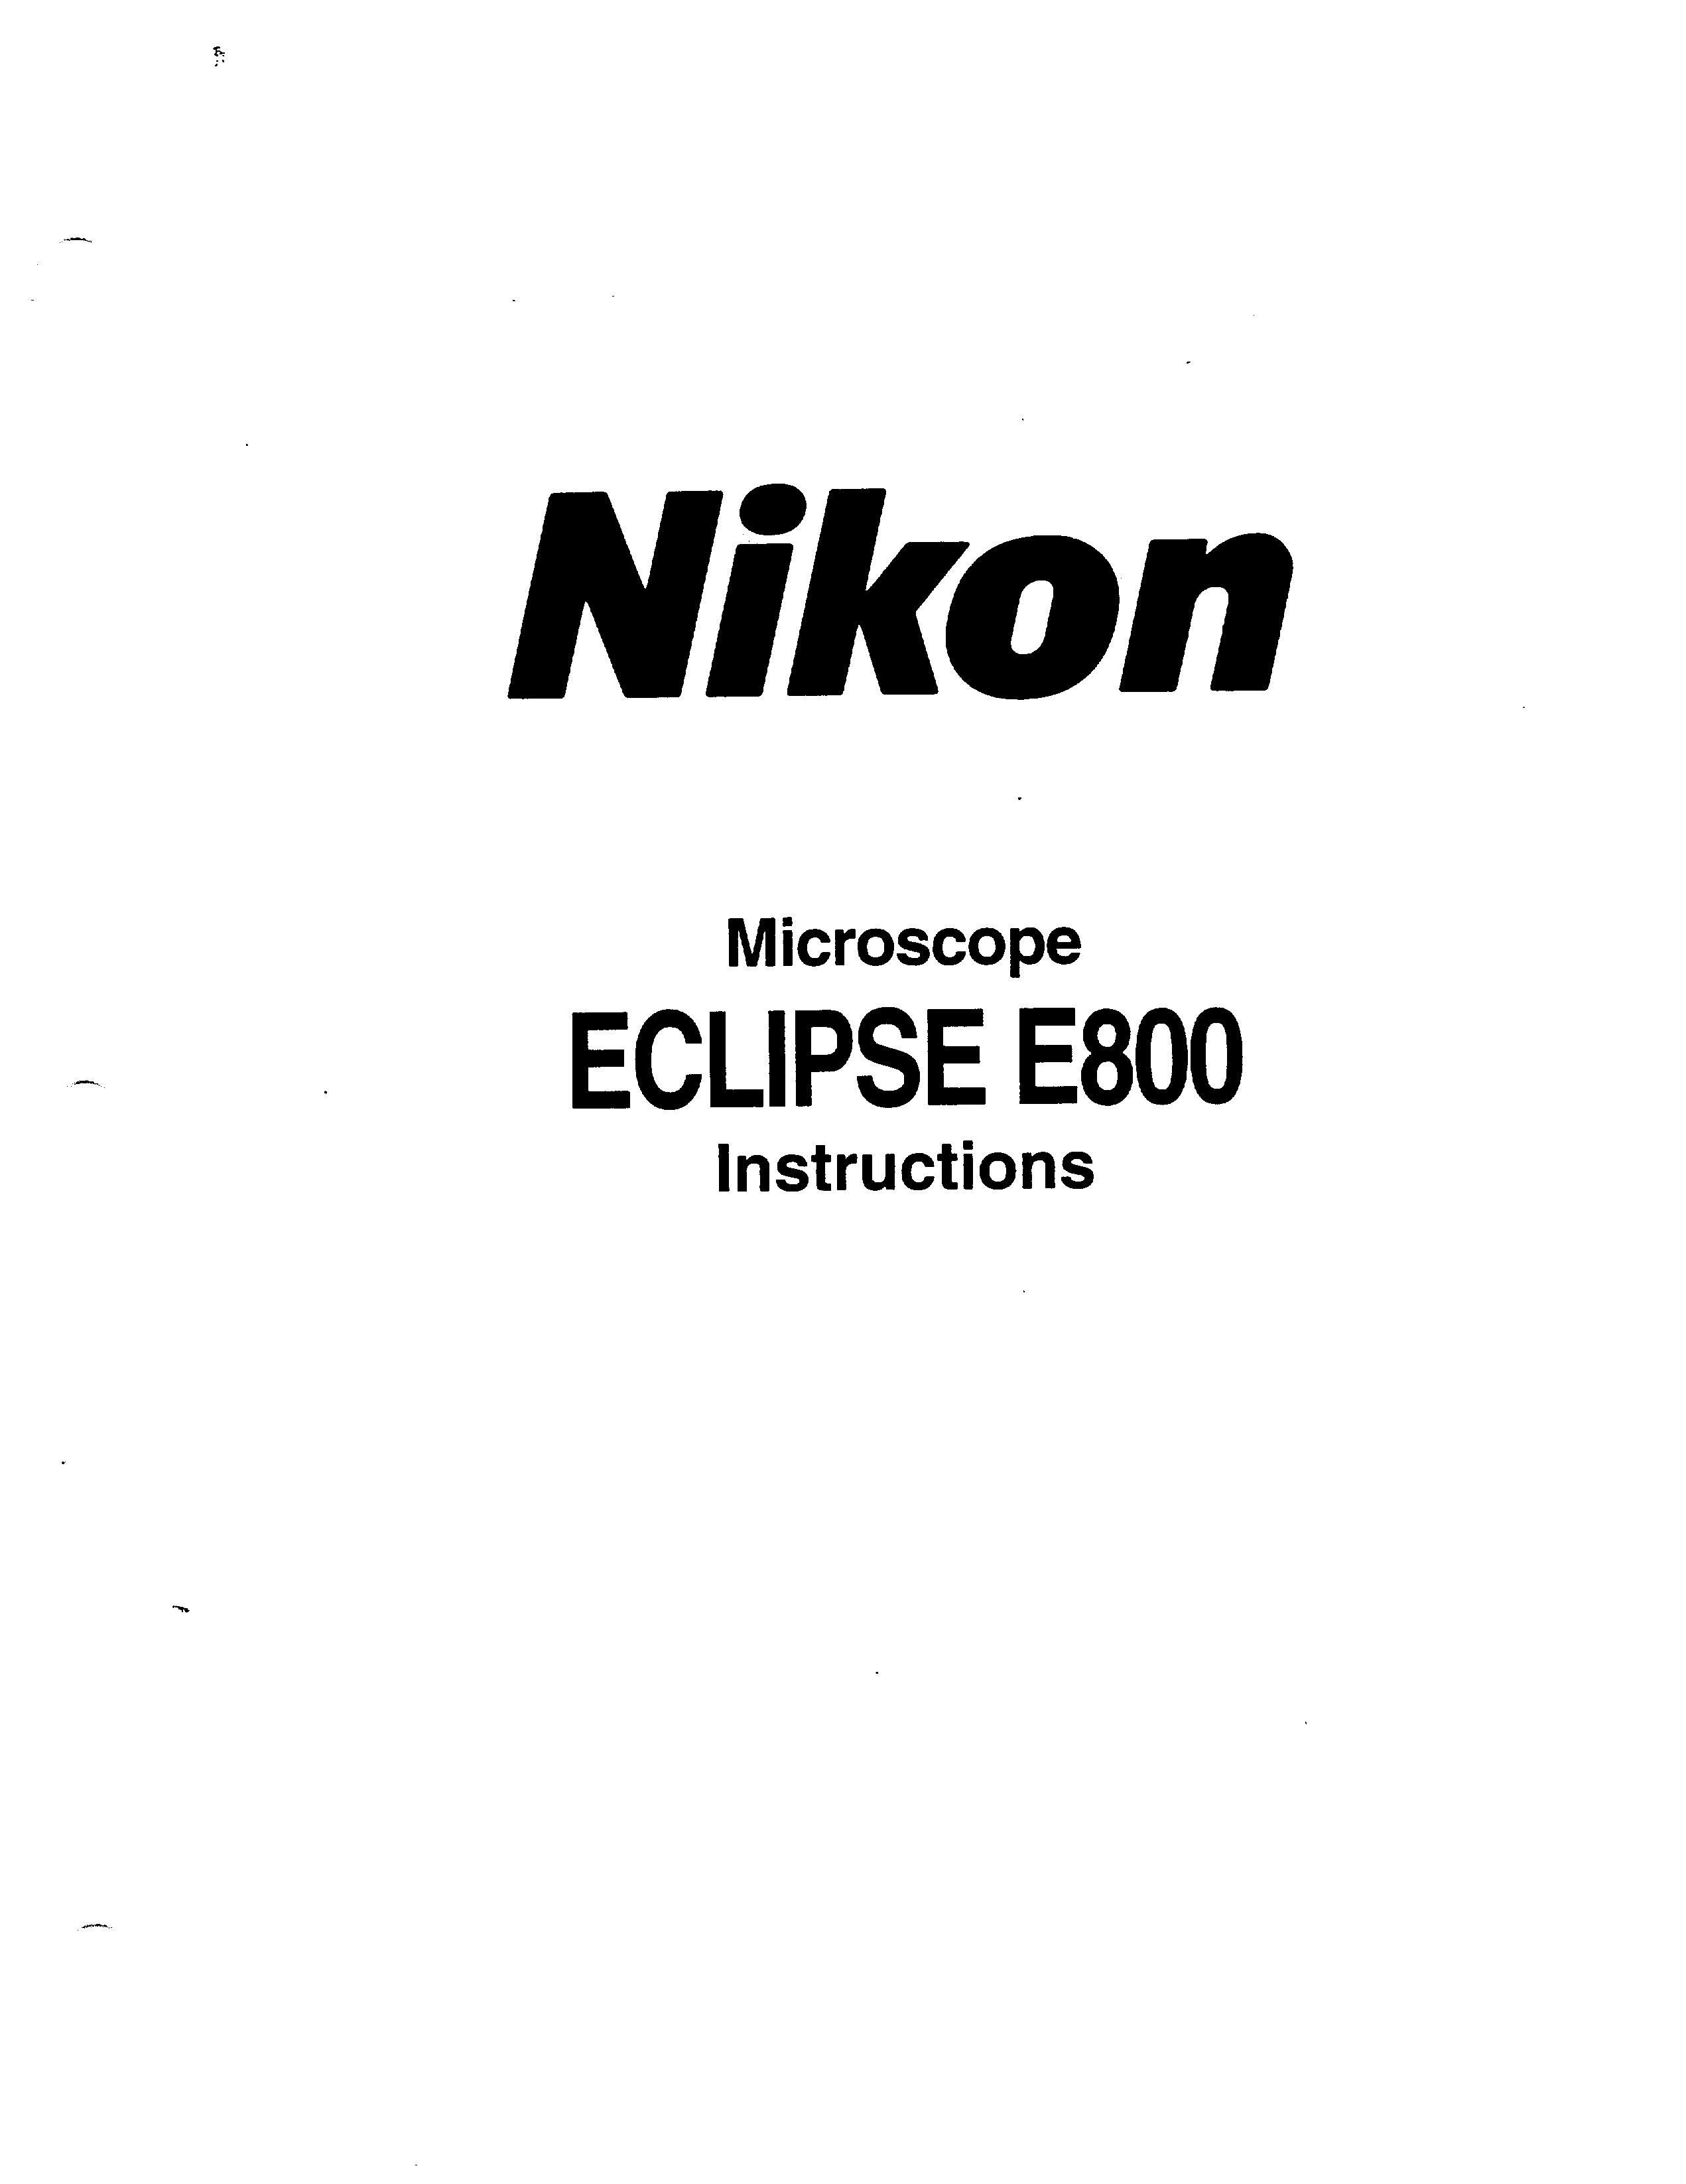 Nikon Eclipse E800 Microscope & Magnifier User Manual